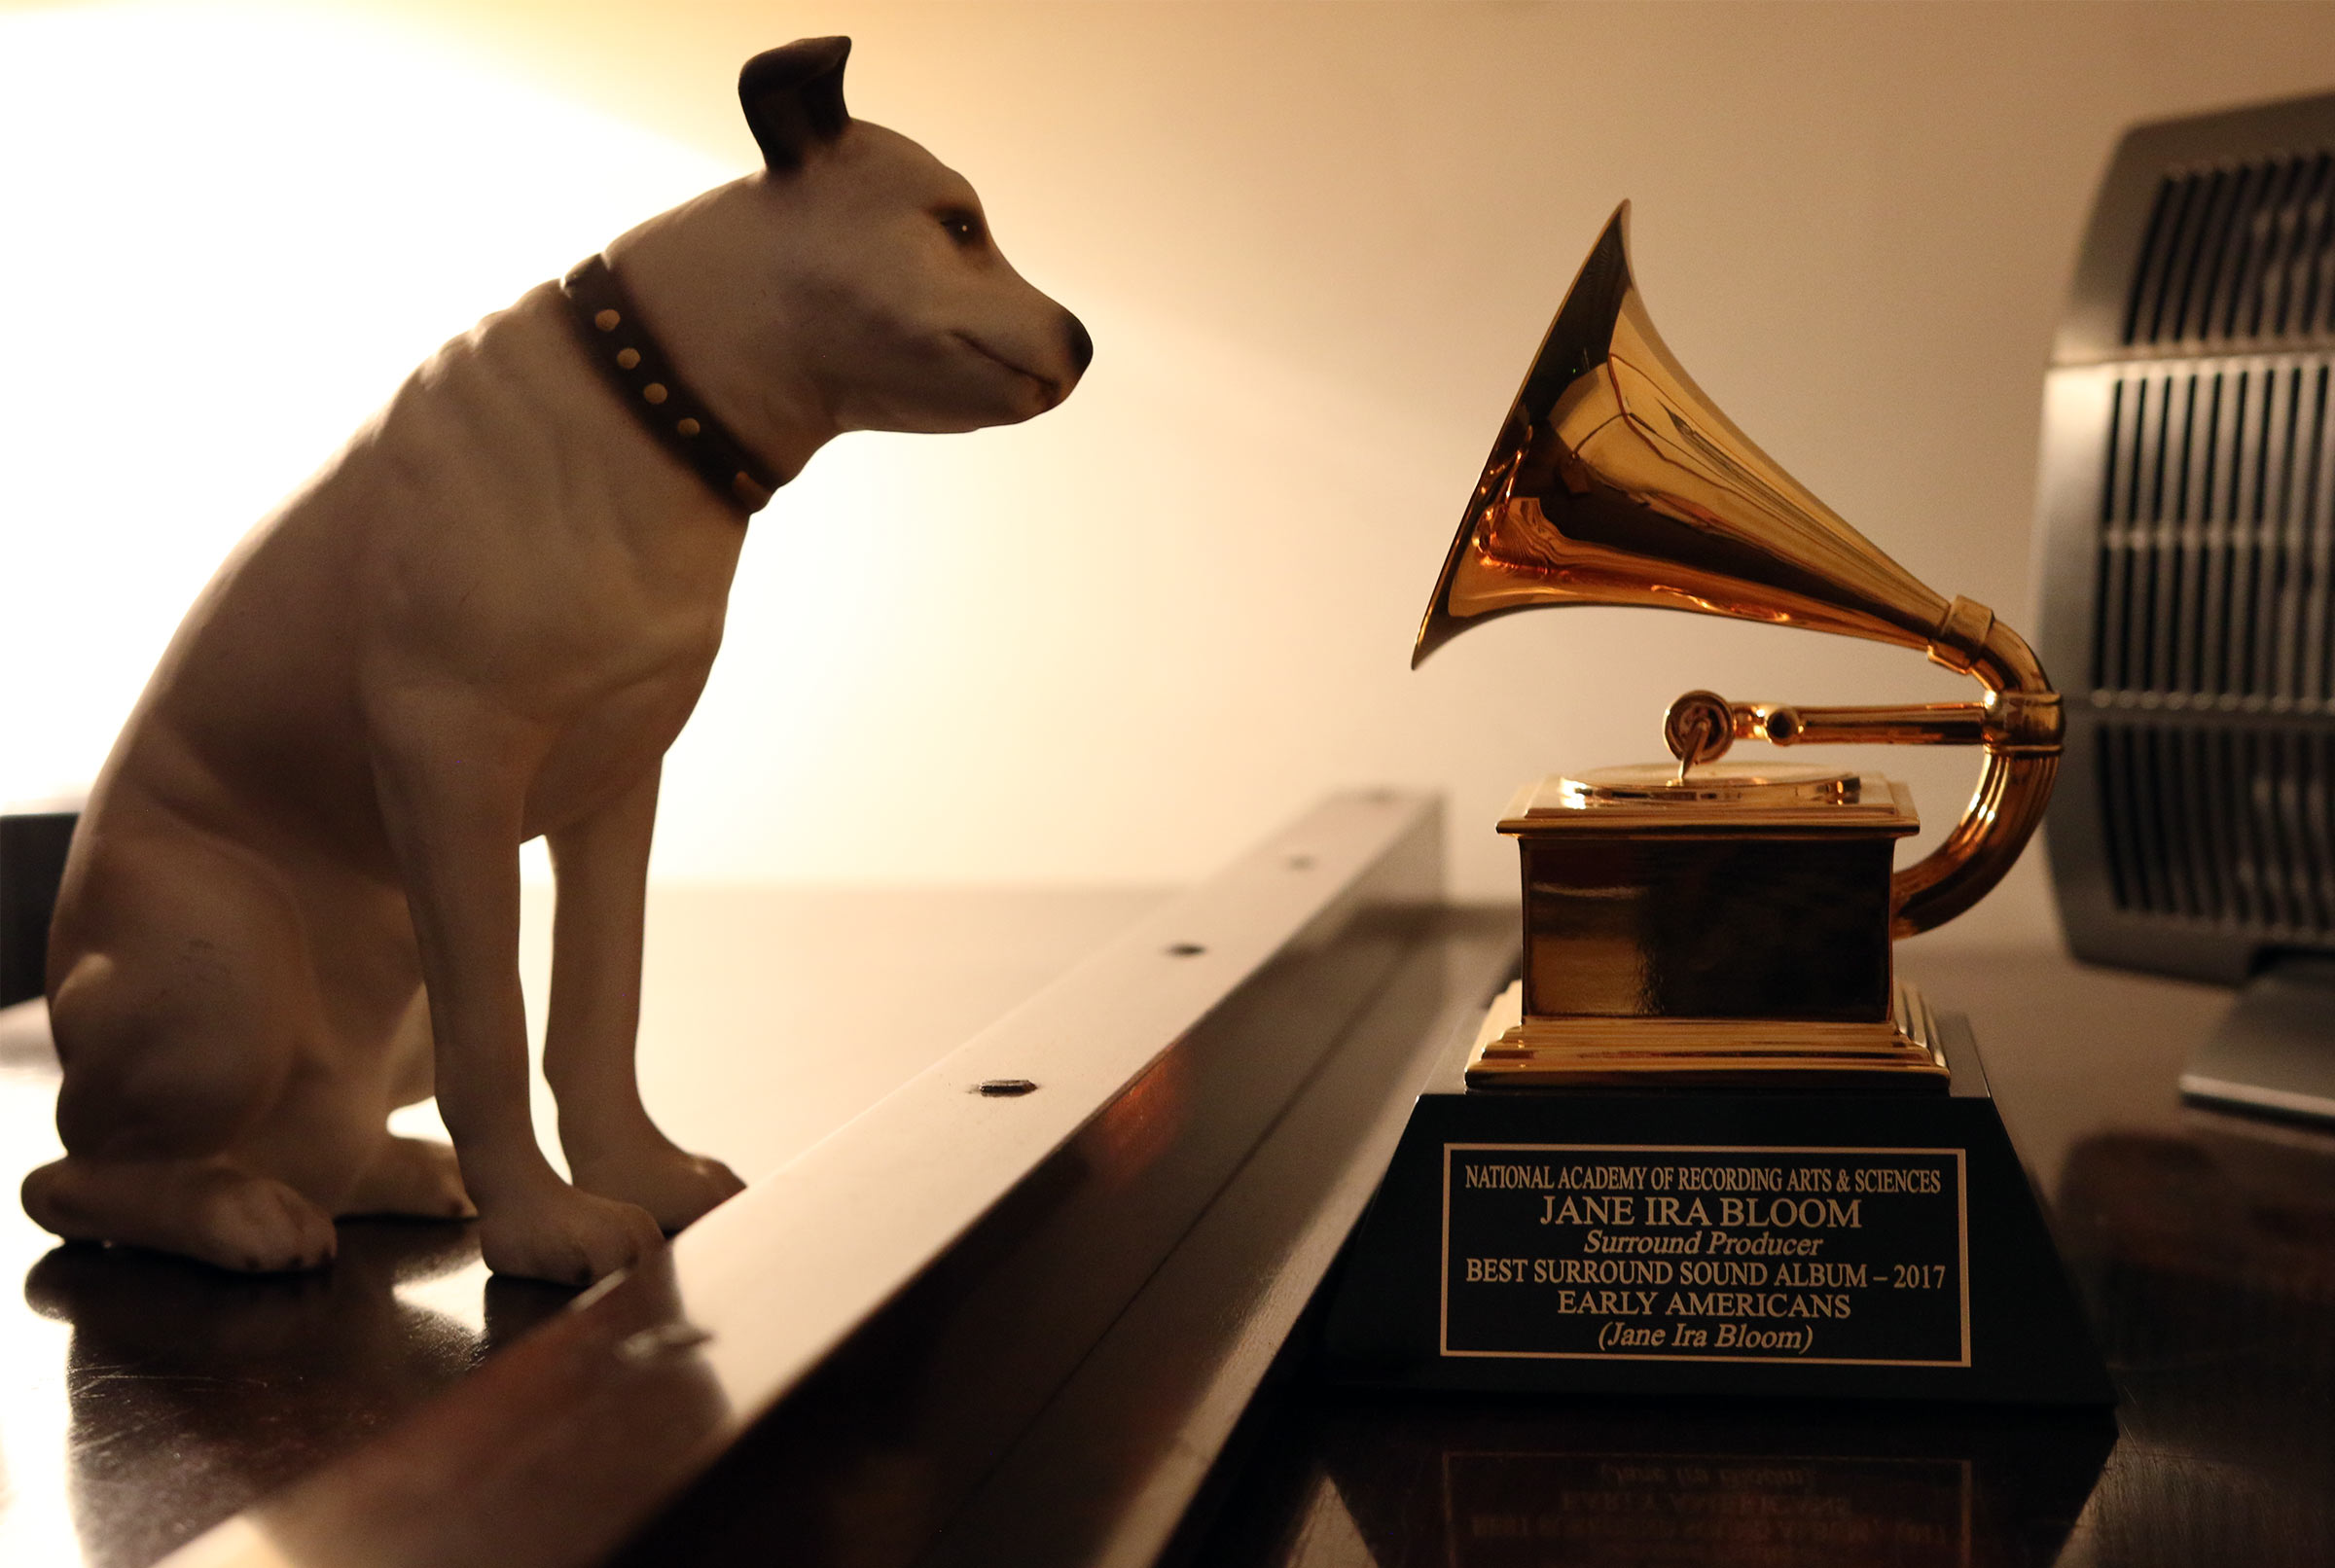 Jane Ira Bloom's Grammy